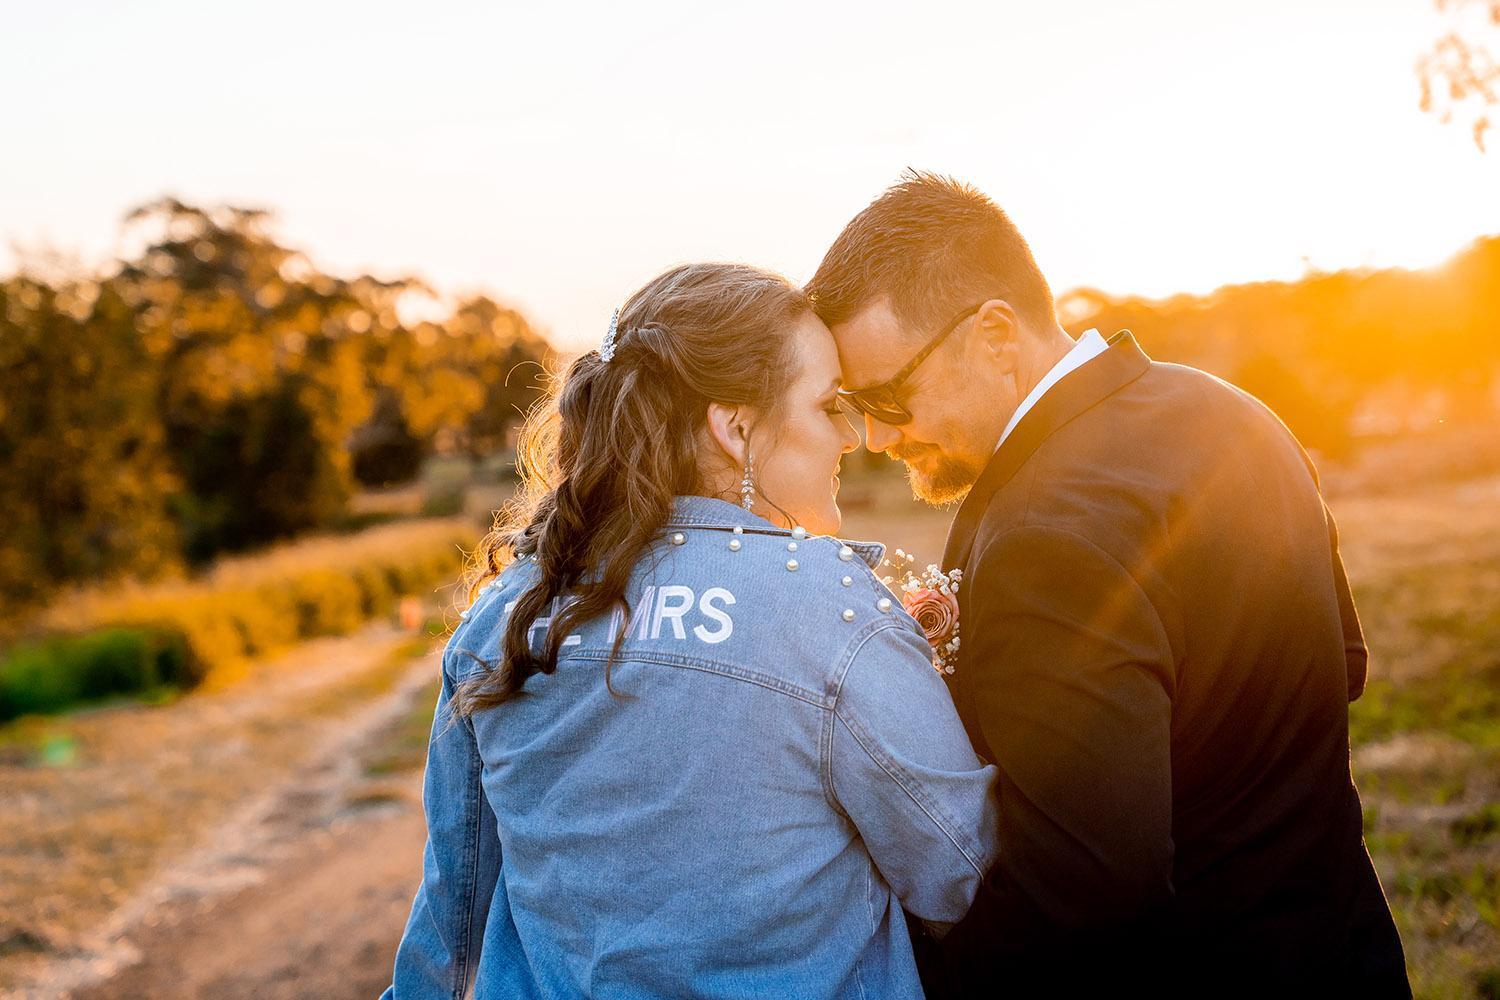 Wedding Photography - Couple embracing at sunset